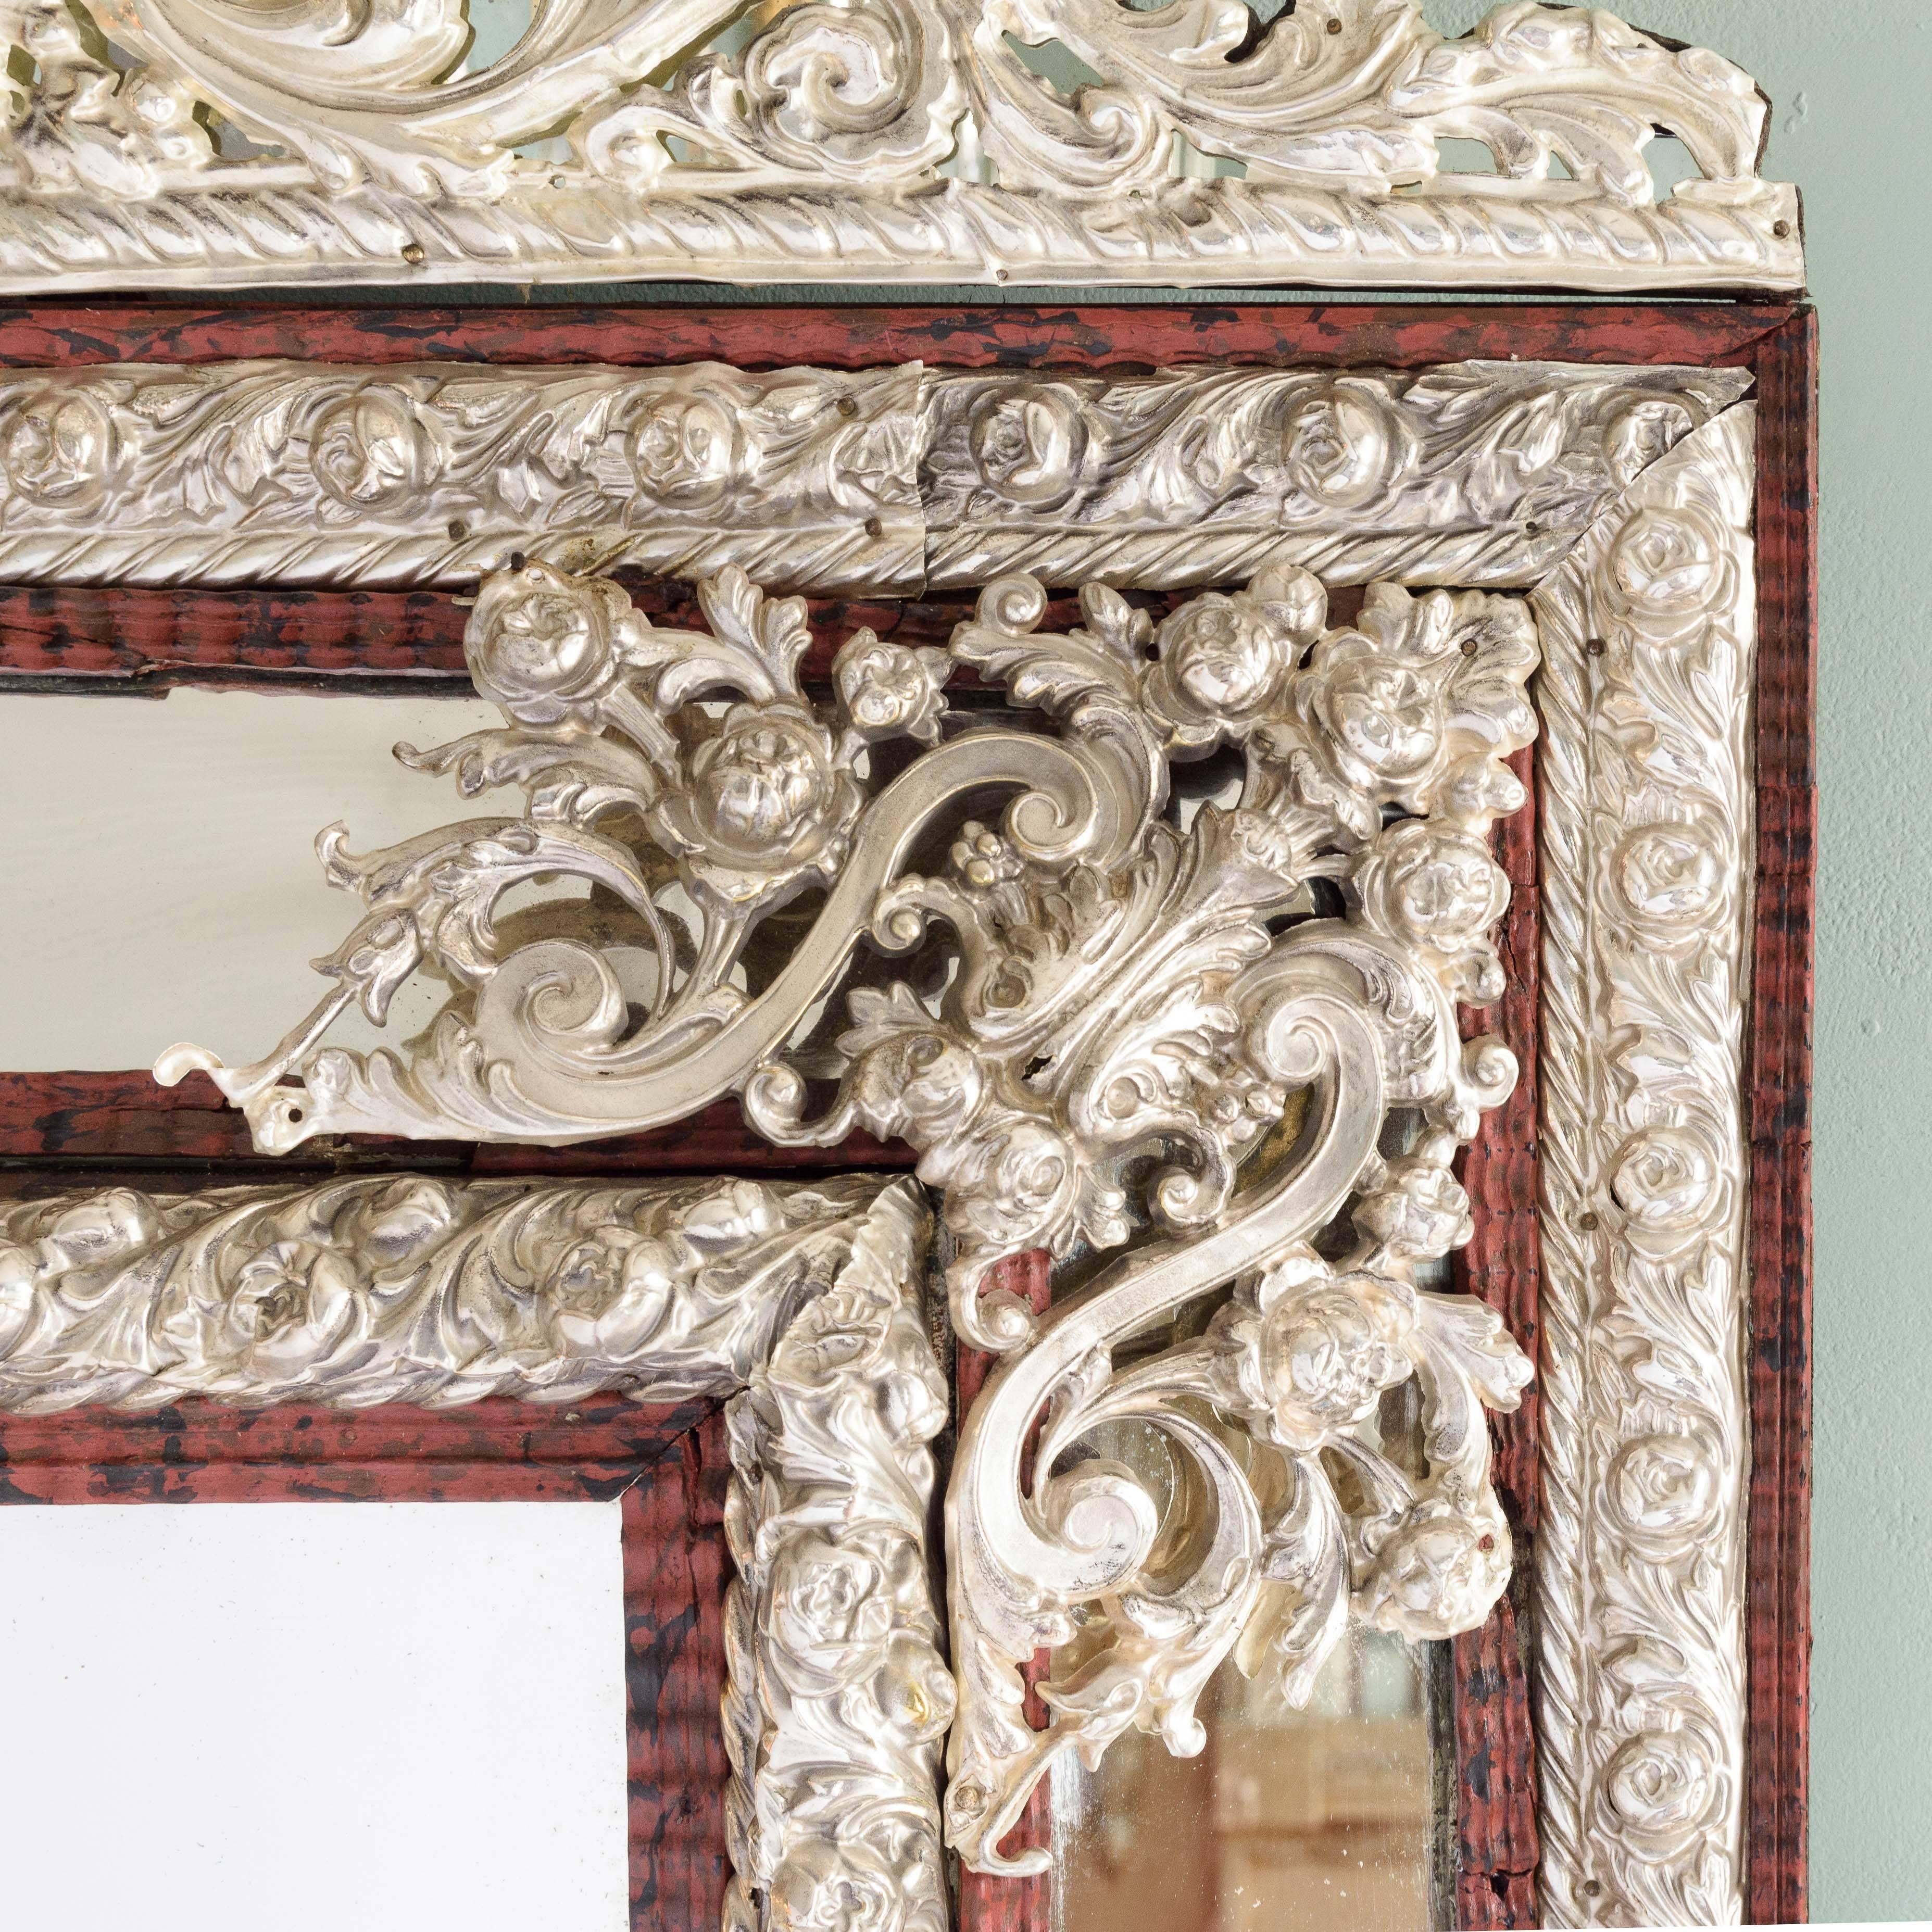 17th century mirrors